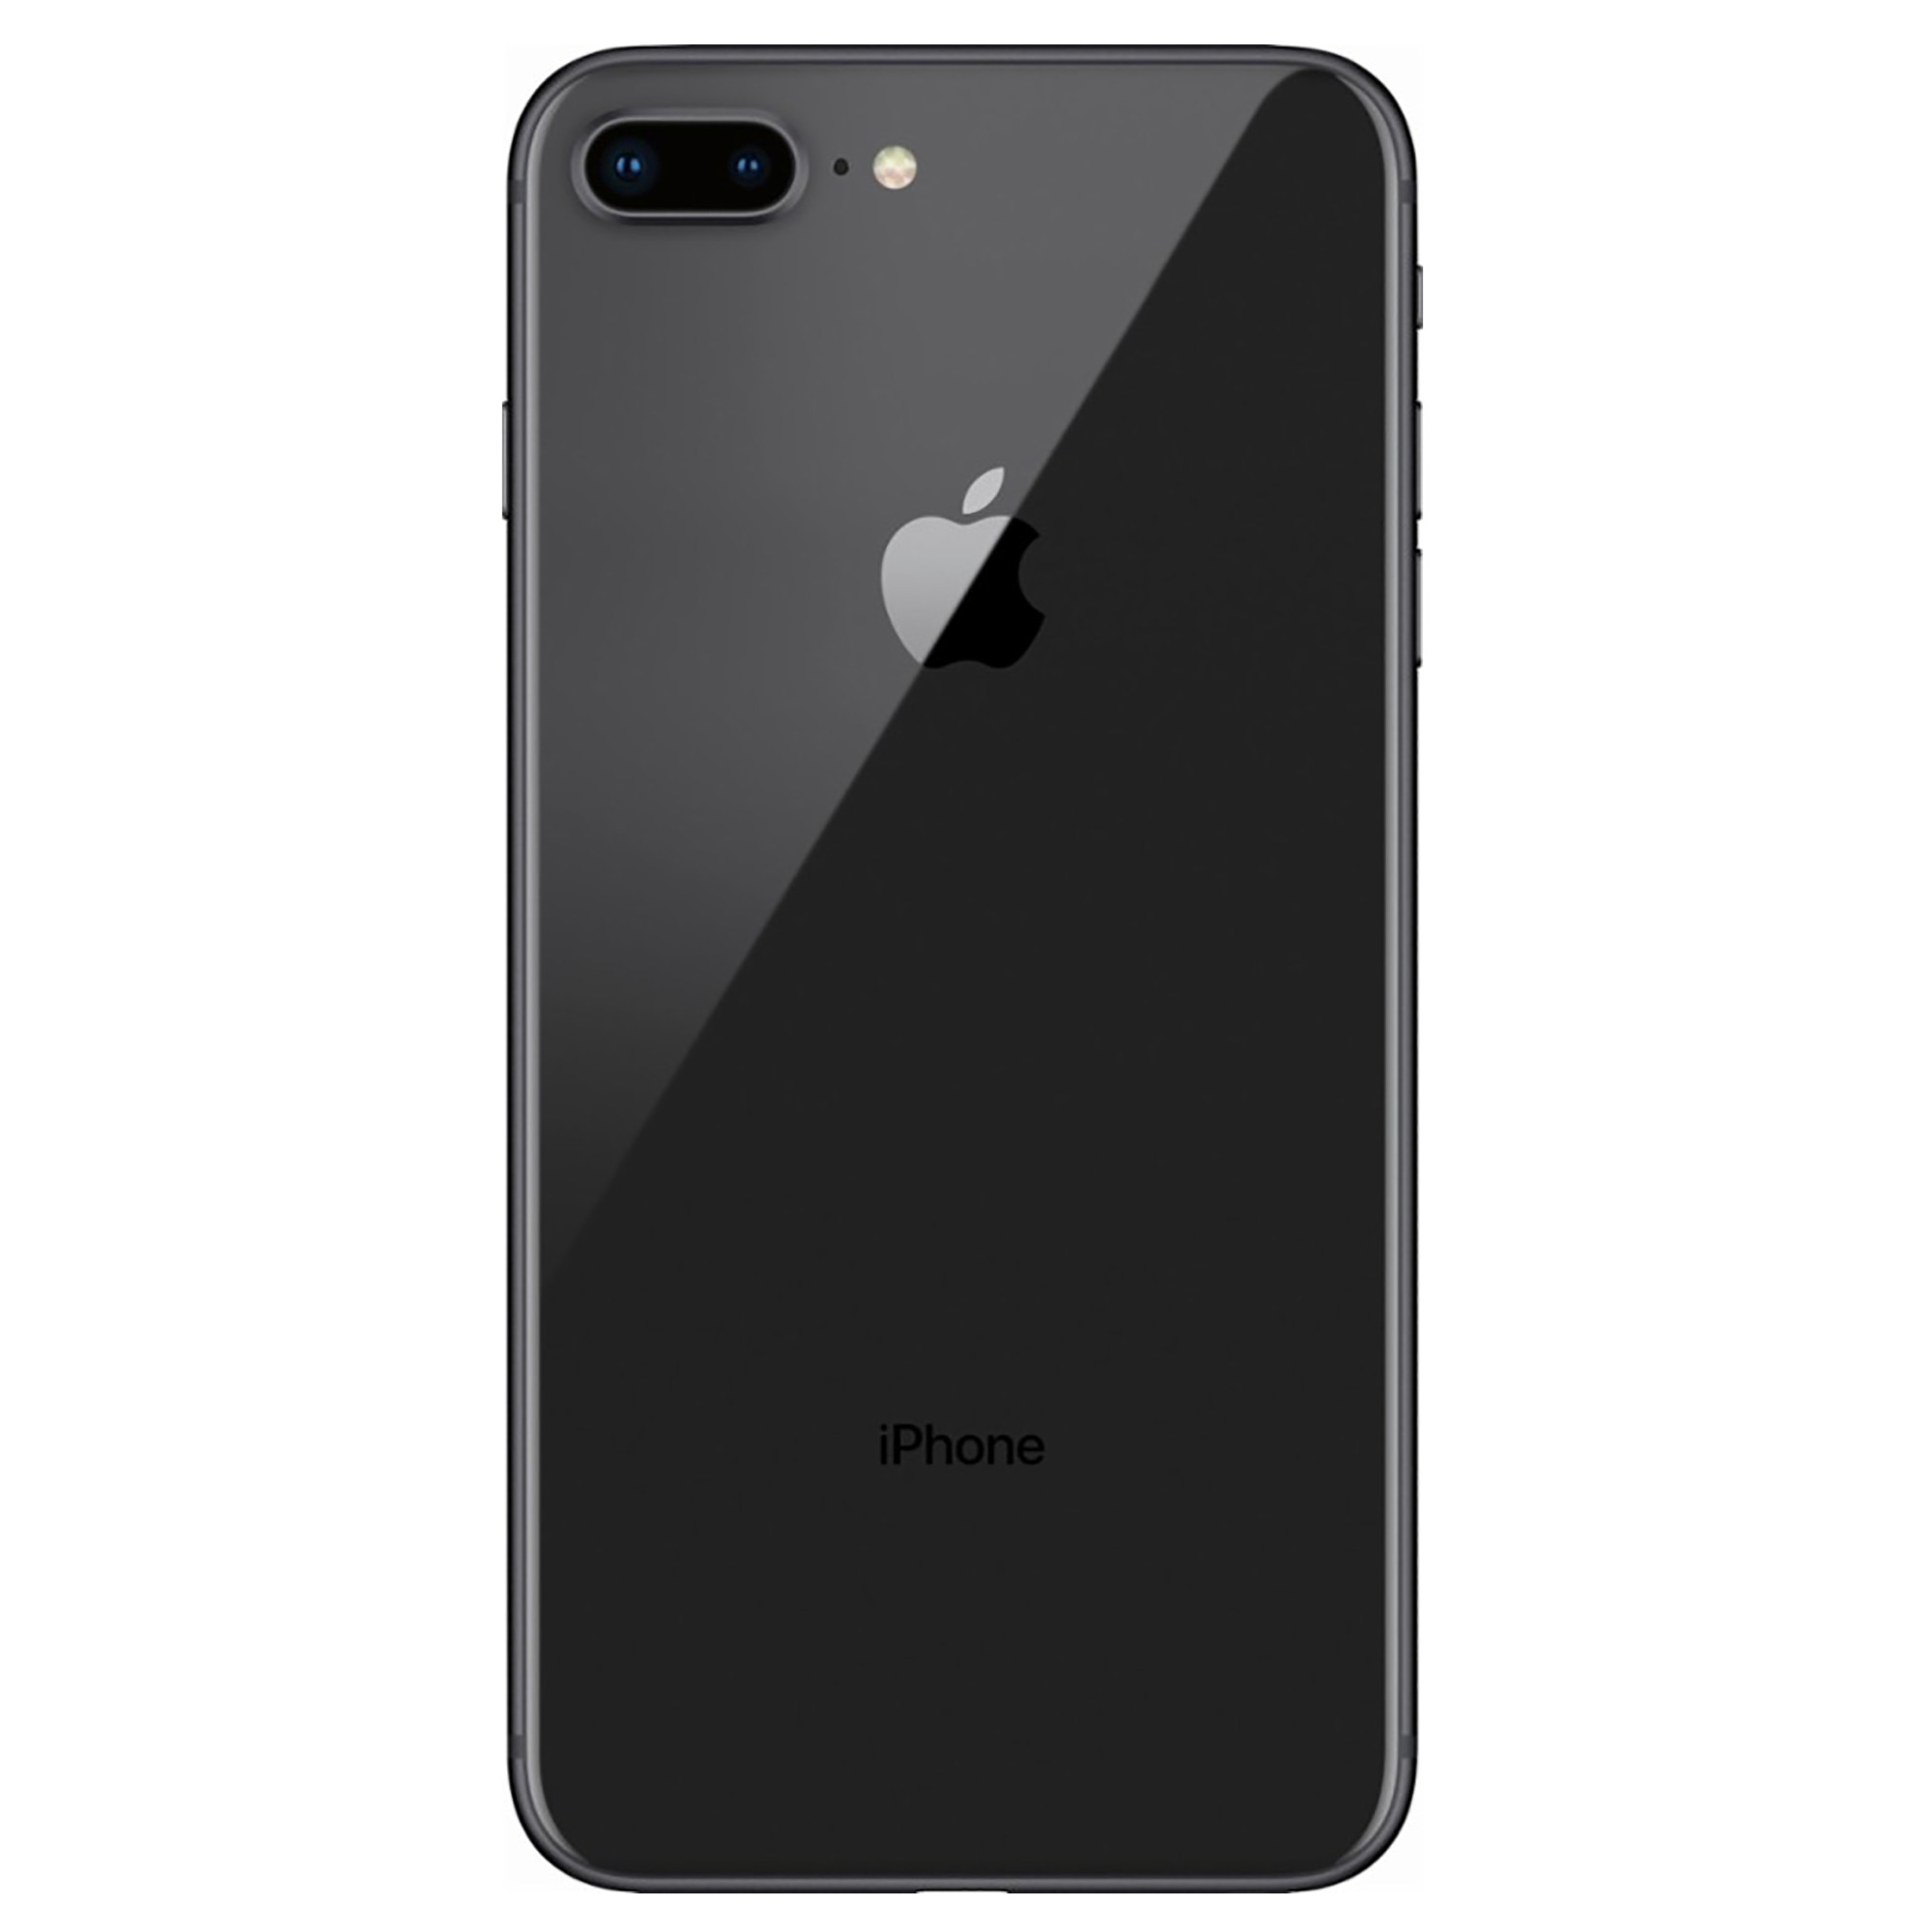 Restored Apple iPhone 8 Plus 64GB Space Gray GSM Unlocked Smartphone ( ) (Refurbished) - image 3 of 4